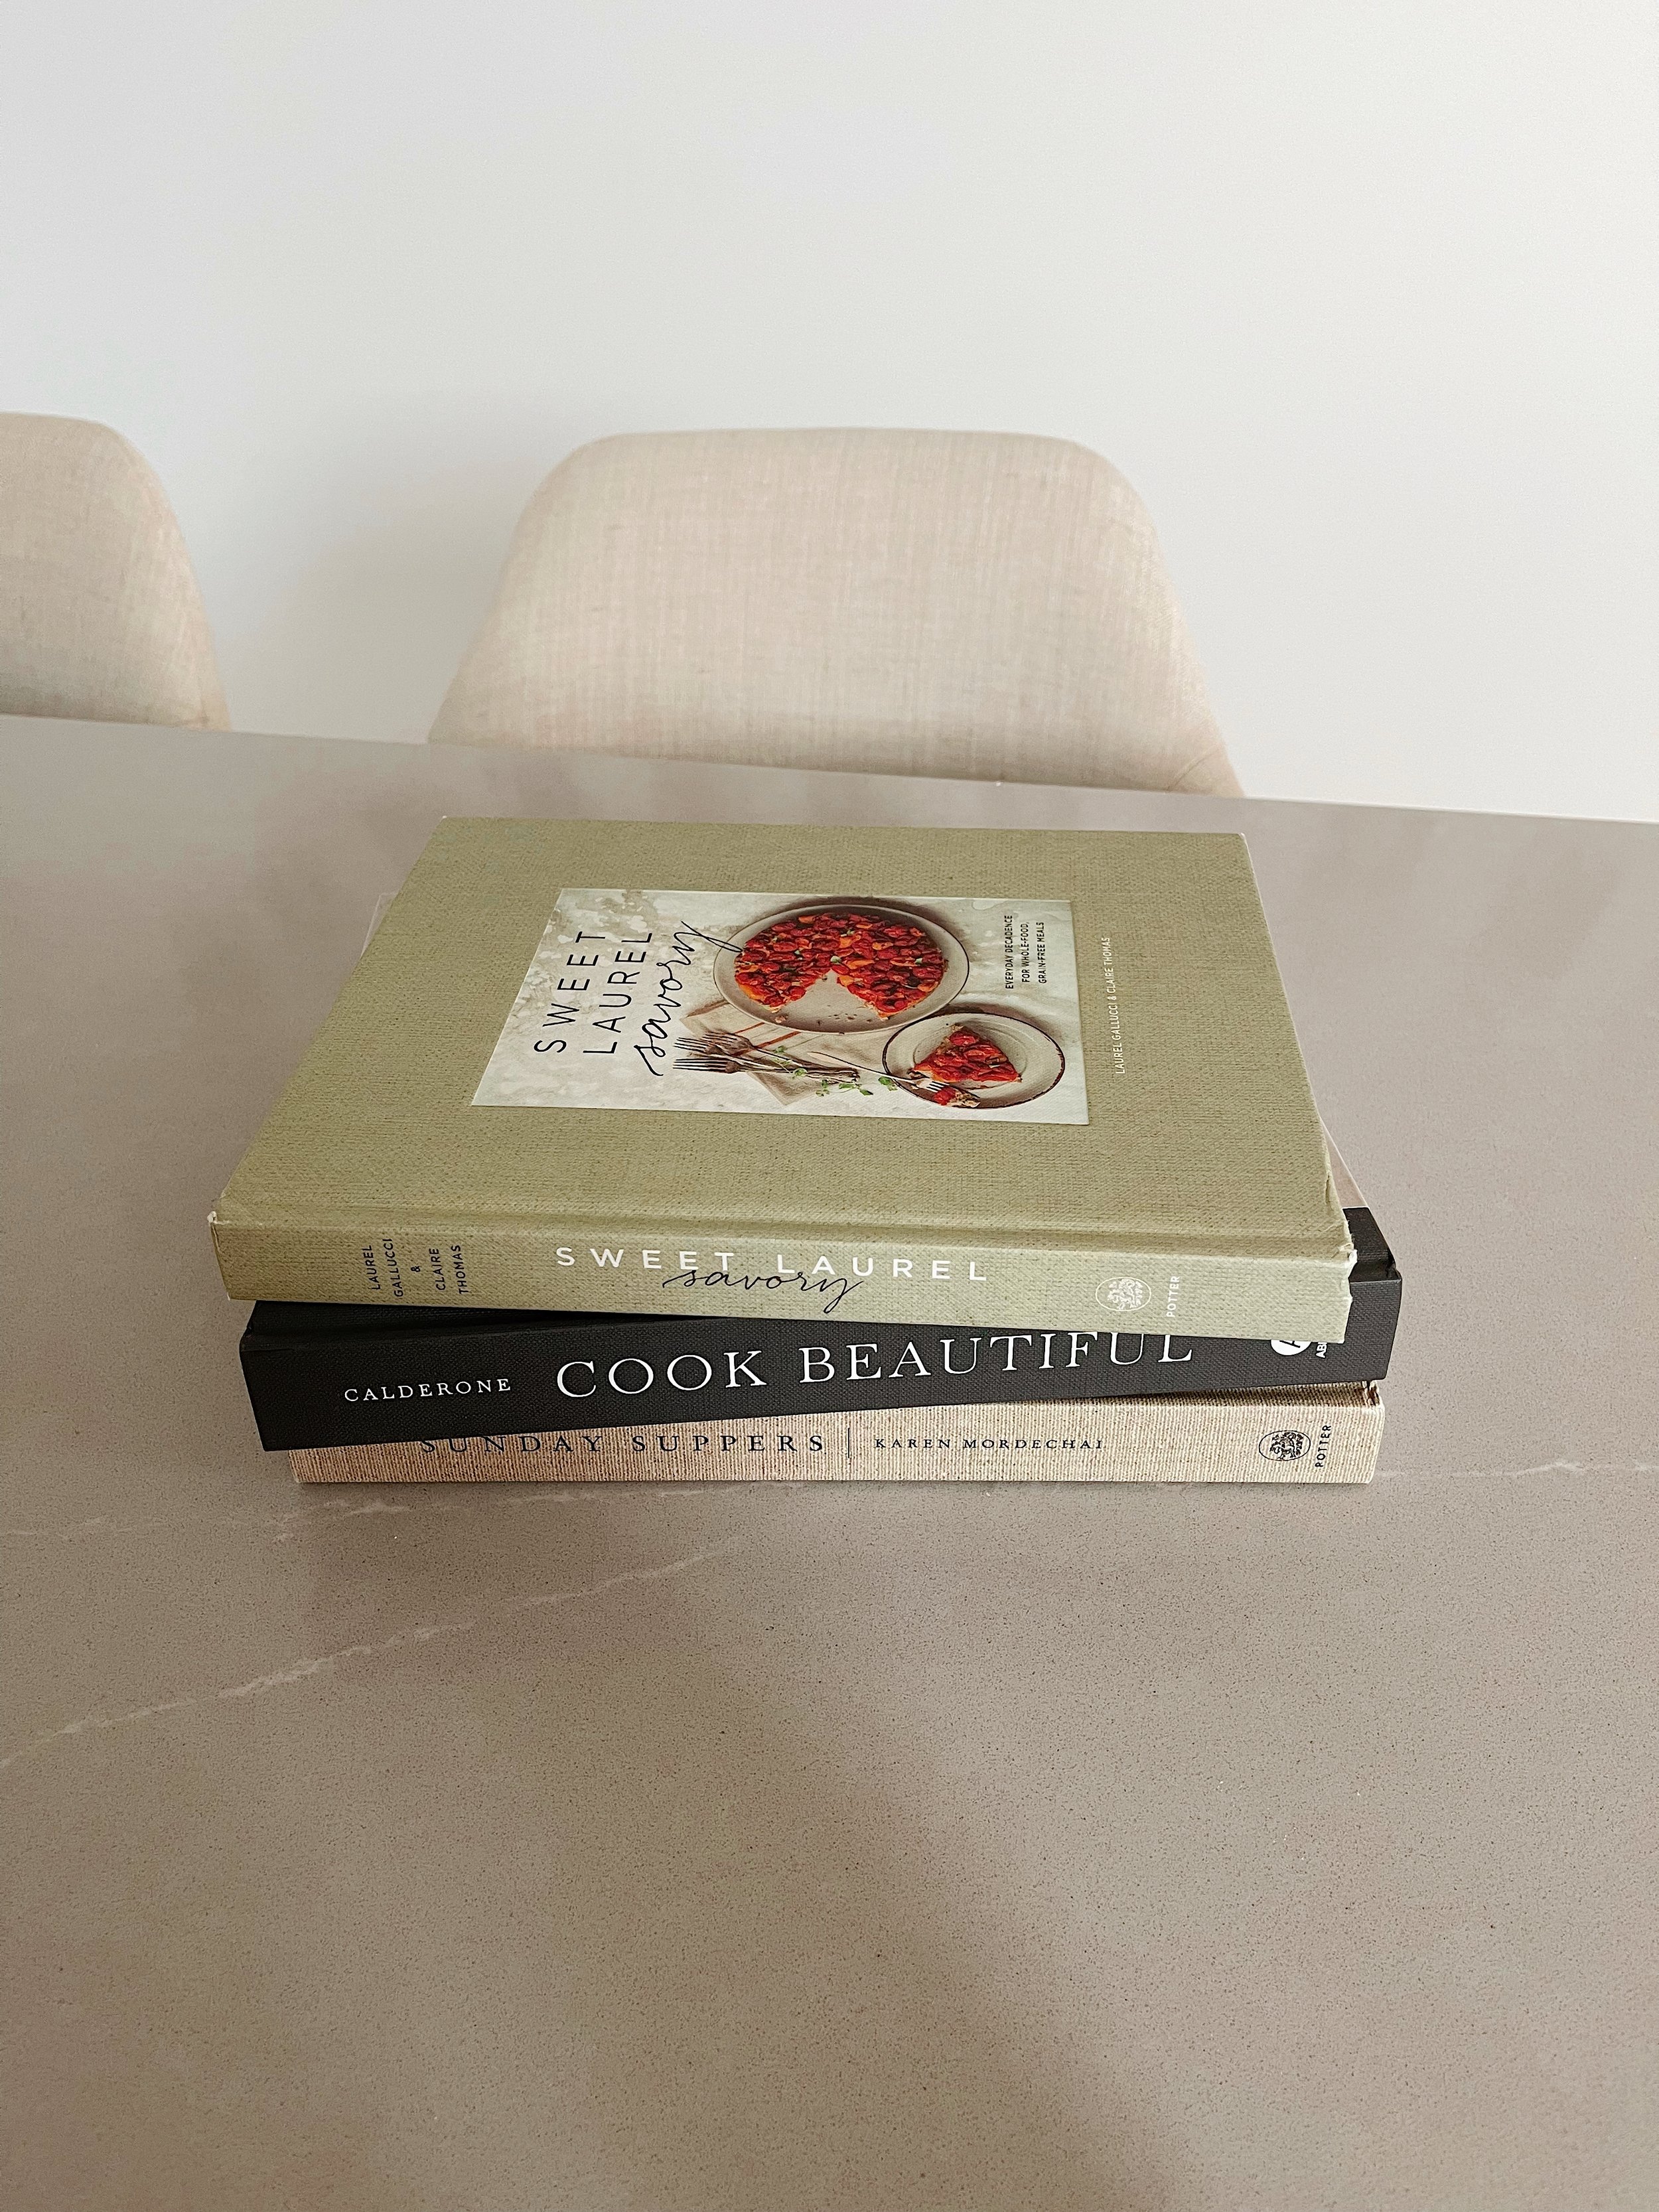 Amazon Home Finds Under $50 - cookbook - bresheppard.com.JPG